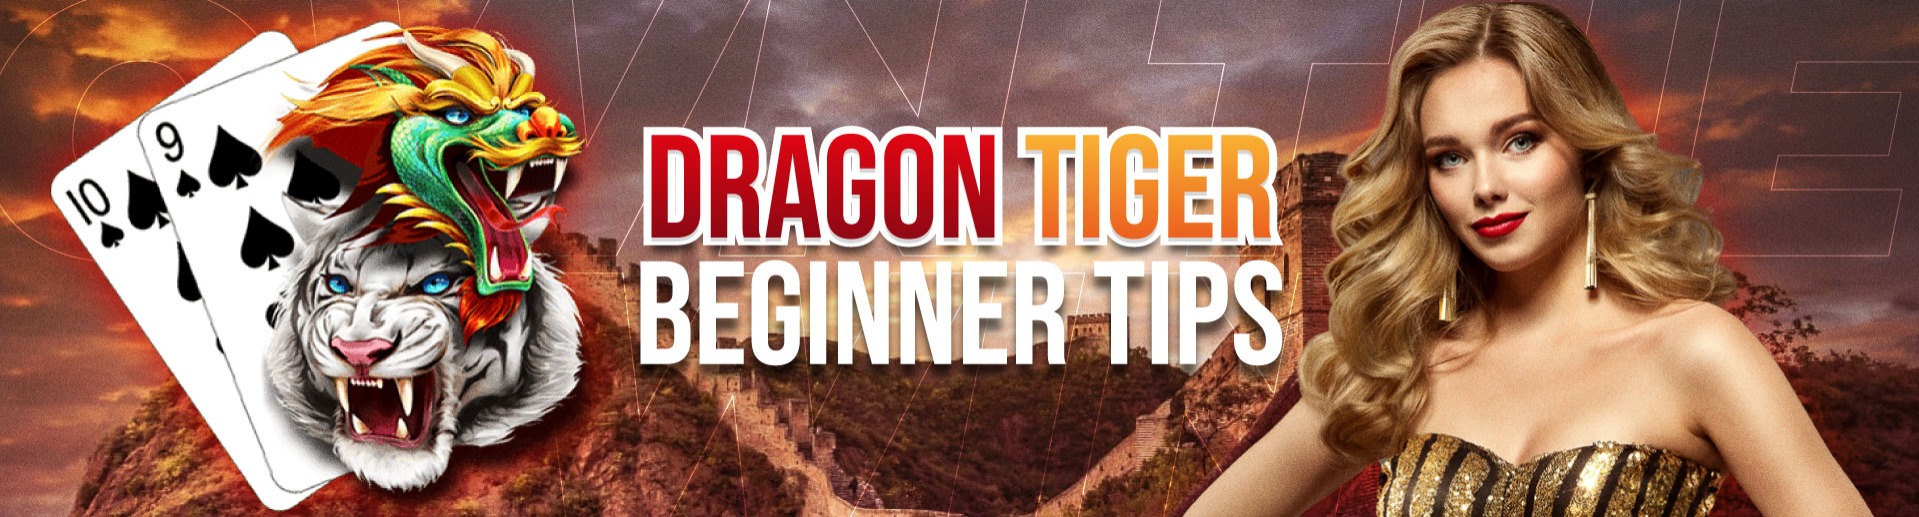 Dragon Tiger tips